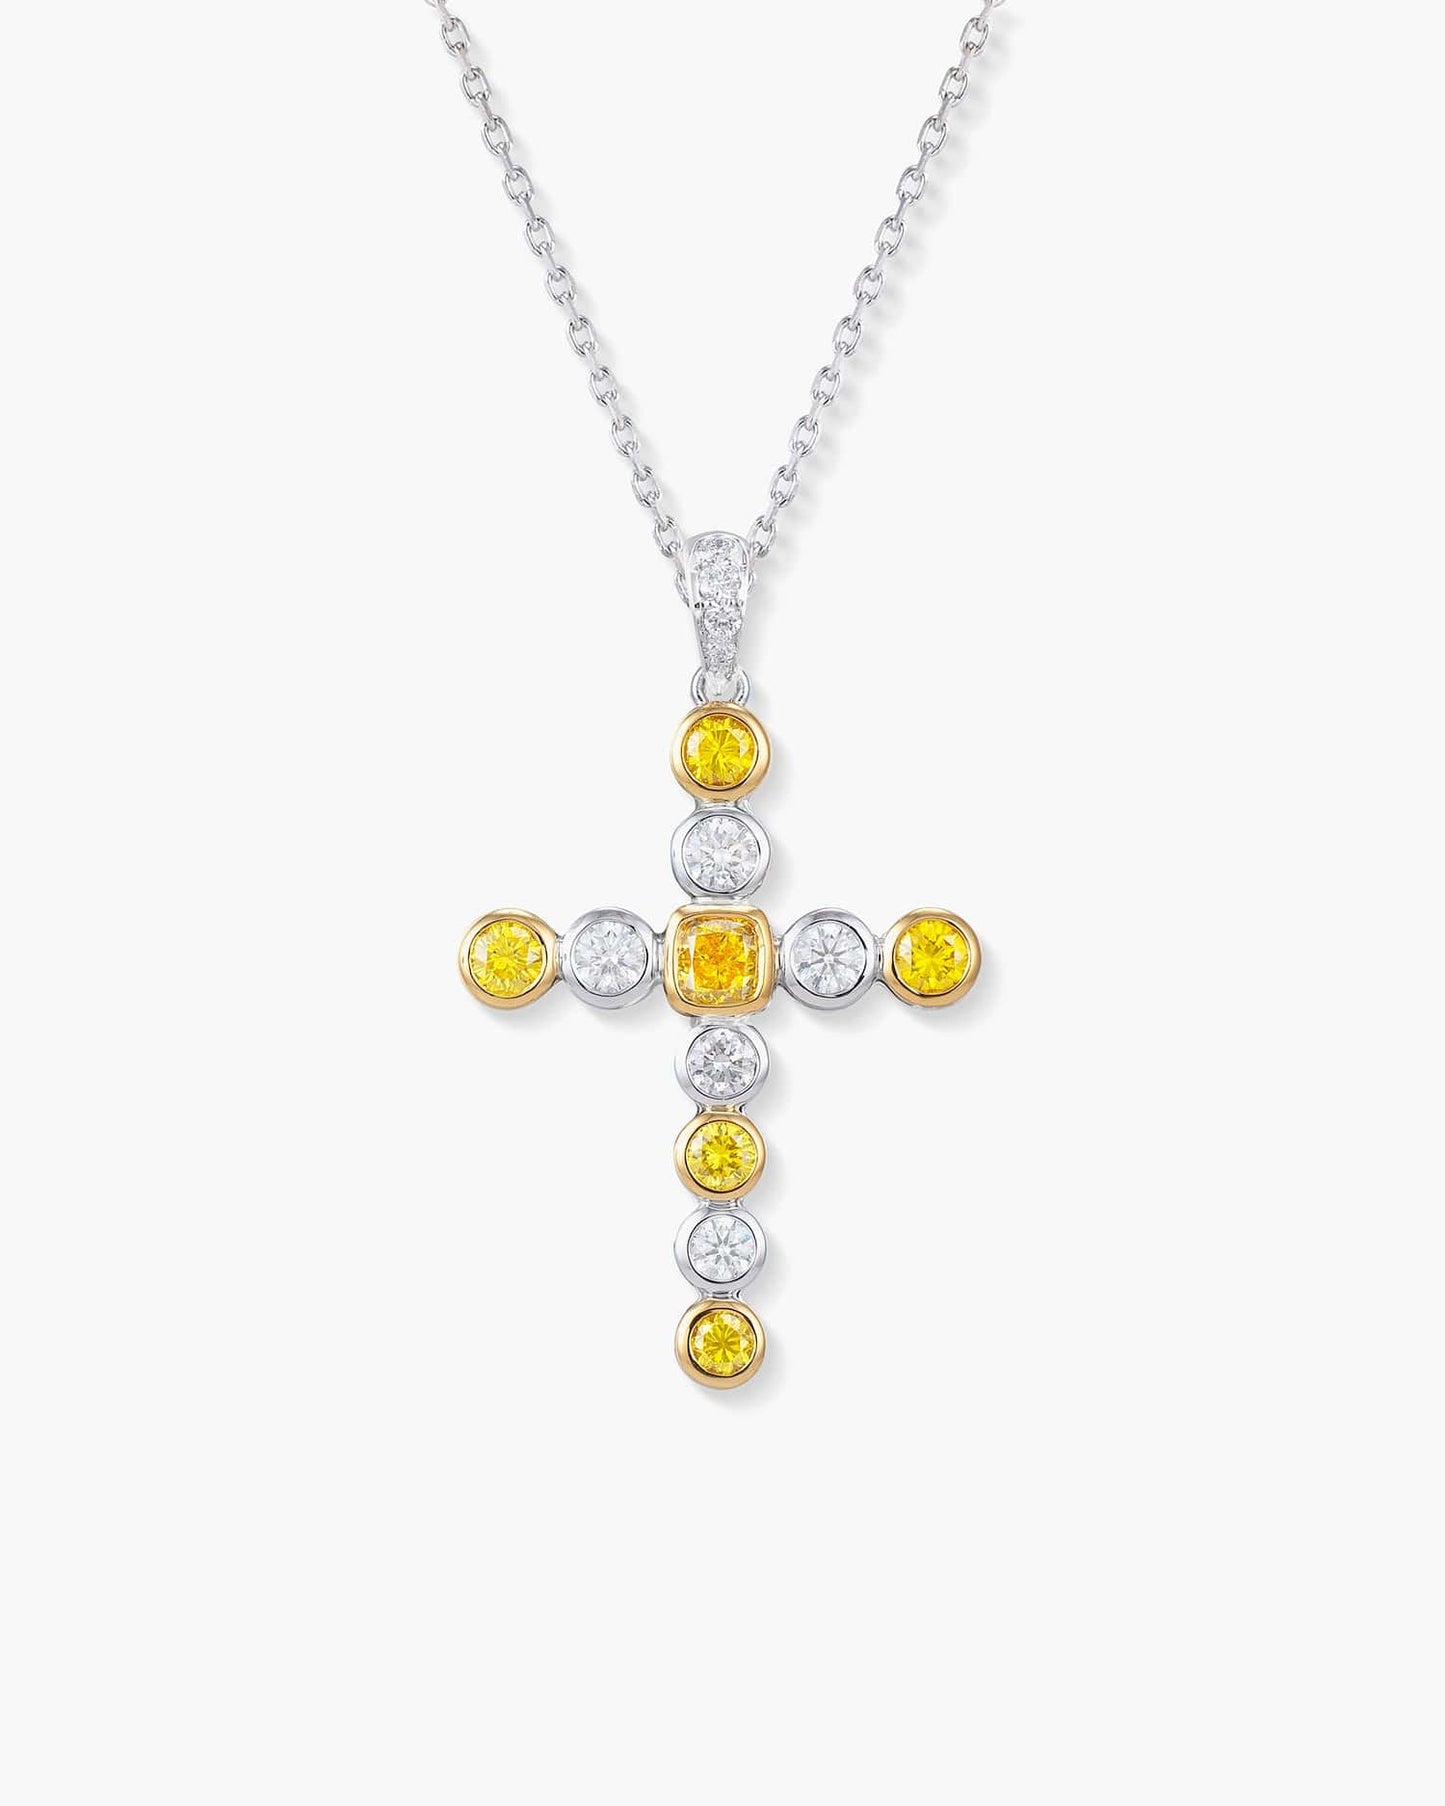 Yellow and White Diamond Cross Pendant Necklace, 1.46 carats